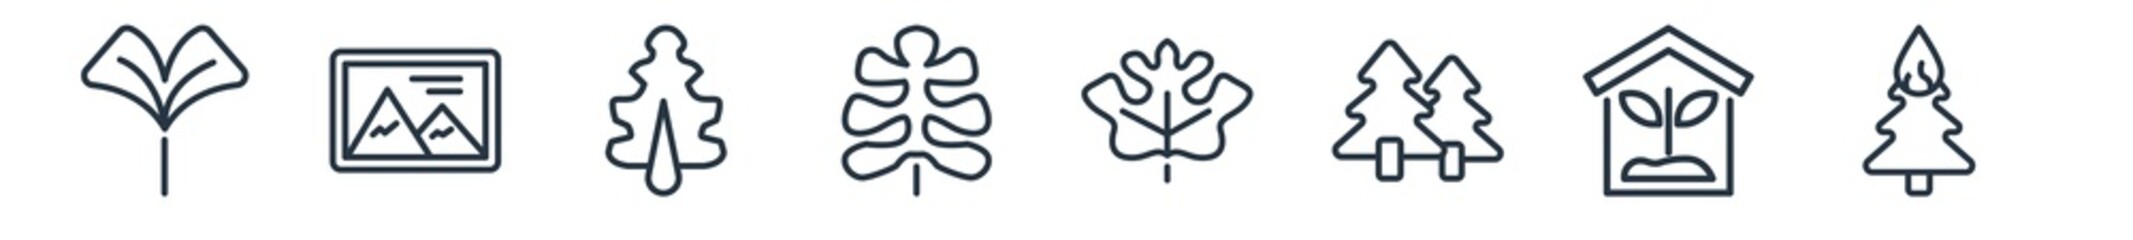 linear set of nature outline icons. line vector icons such as ginkgo, landscape inside frame, pedunculate, oak leaf, hawthorn leaf, pine tree on fire vector illustration.